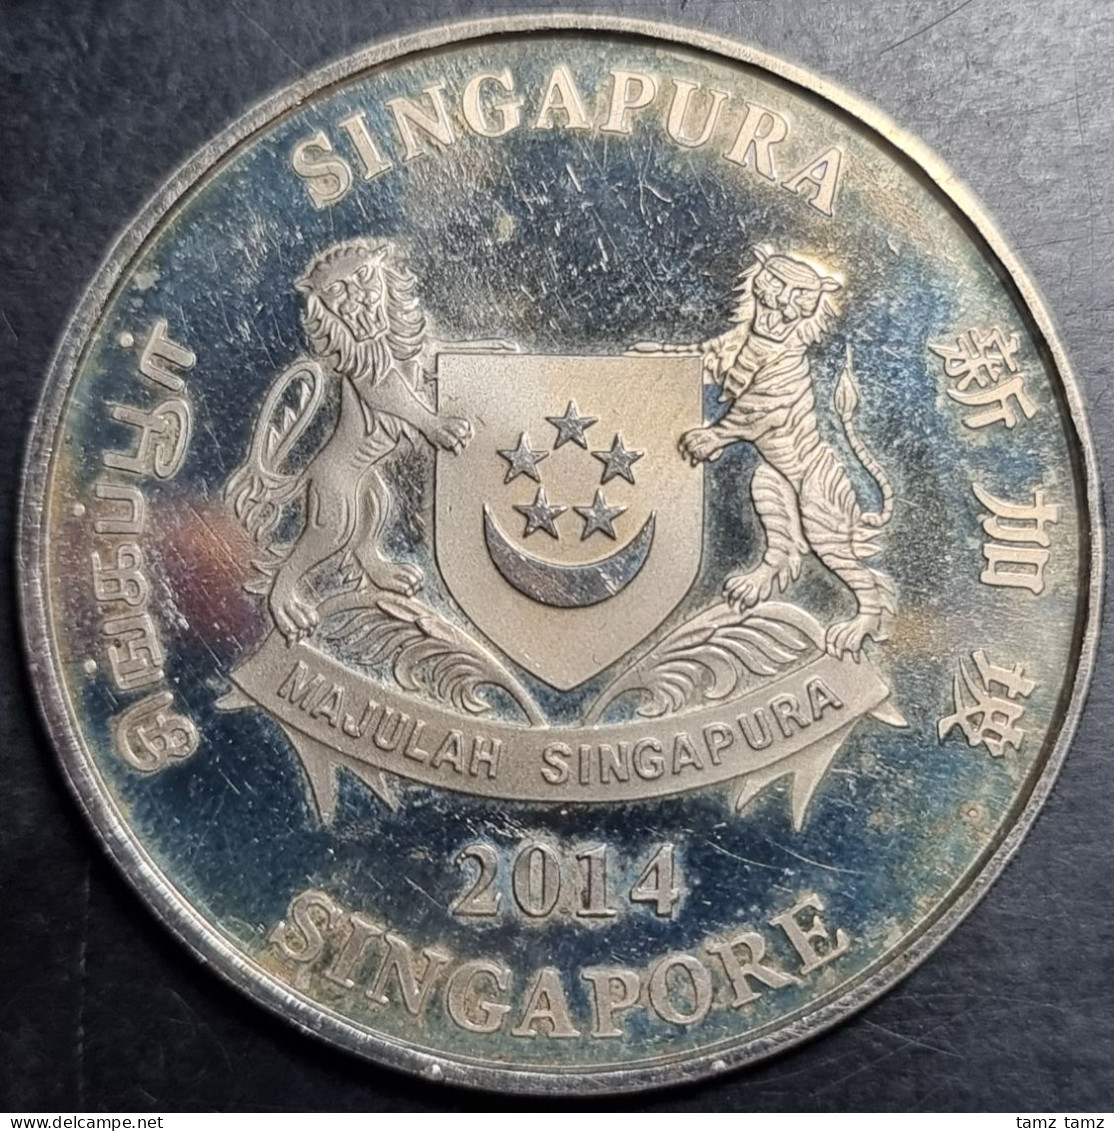 Singapore Zodiac Lunar Horse Proof Like 2 Dollars 2014 UNC - Singapur